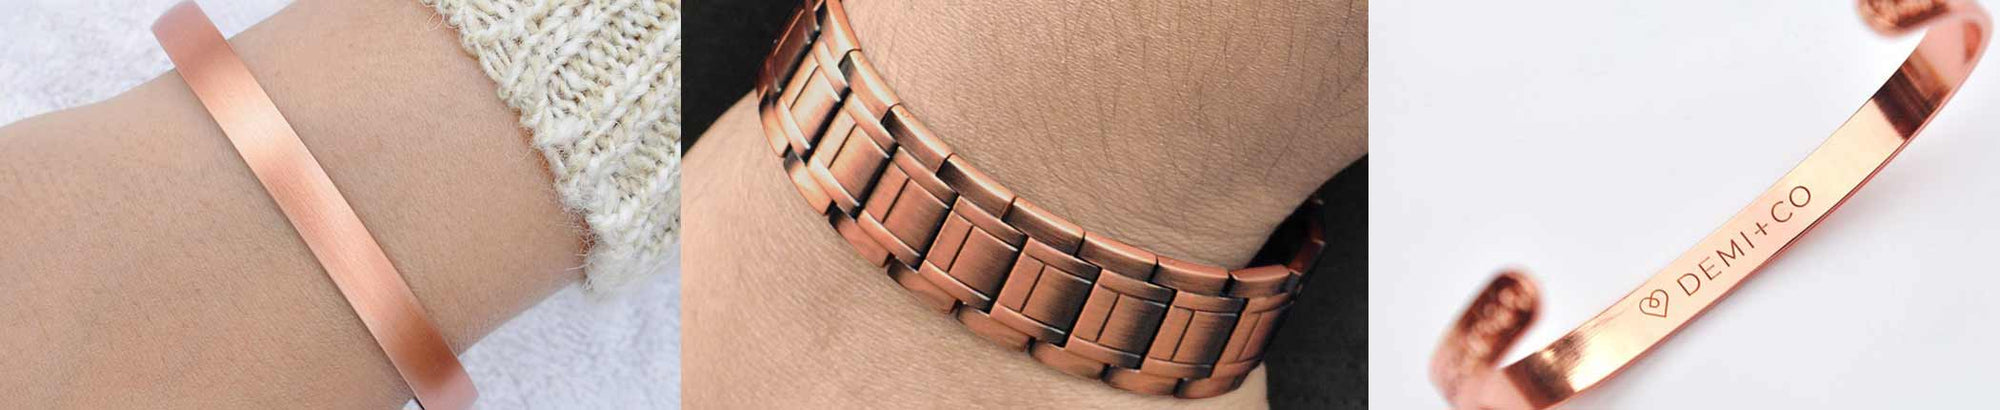 Amazon.com: Auinz Malachite Crystal Pure Copper Bracelet for Women Healing  Magnetic Therapy Relief Arthritis Pain Carpal Tunnel Women Adjustable  Bracelet (Malachite) : Health & Household